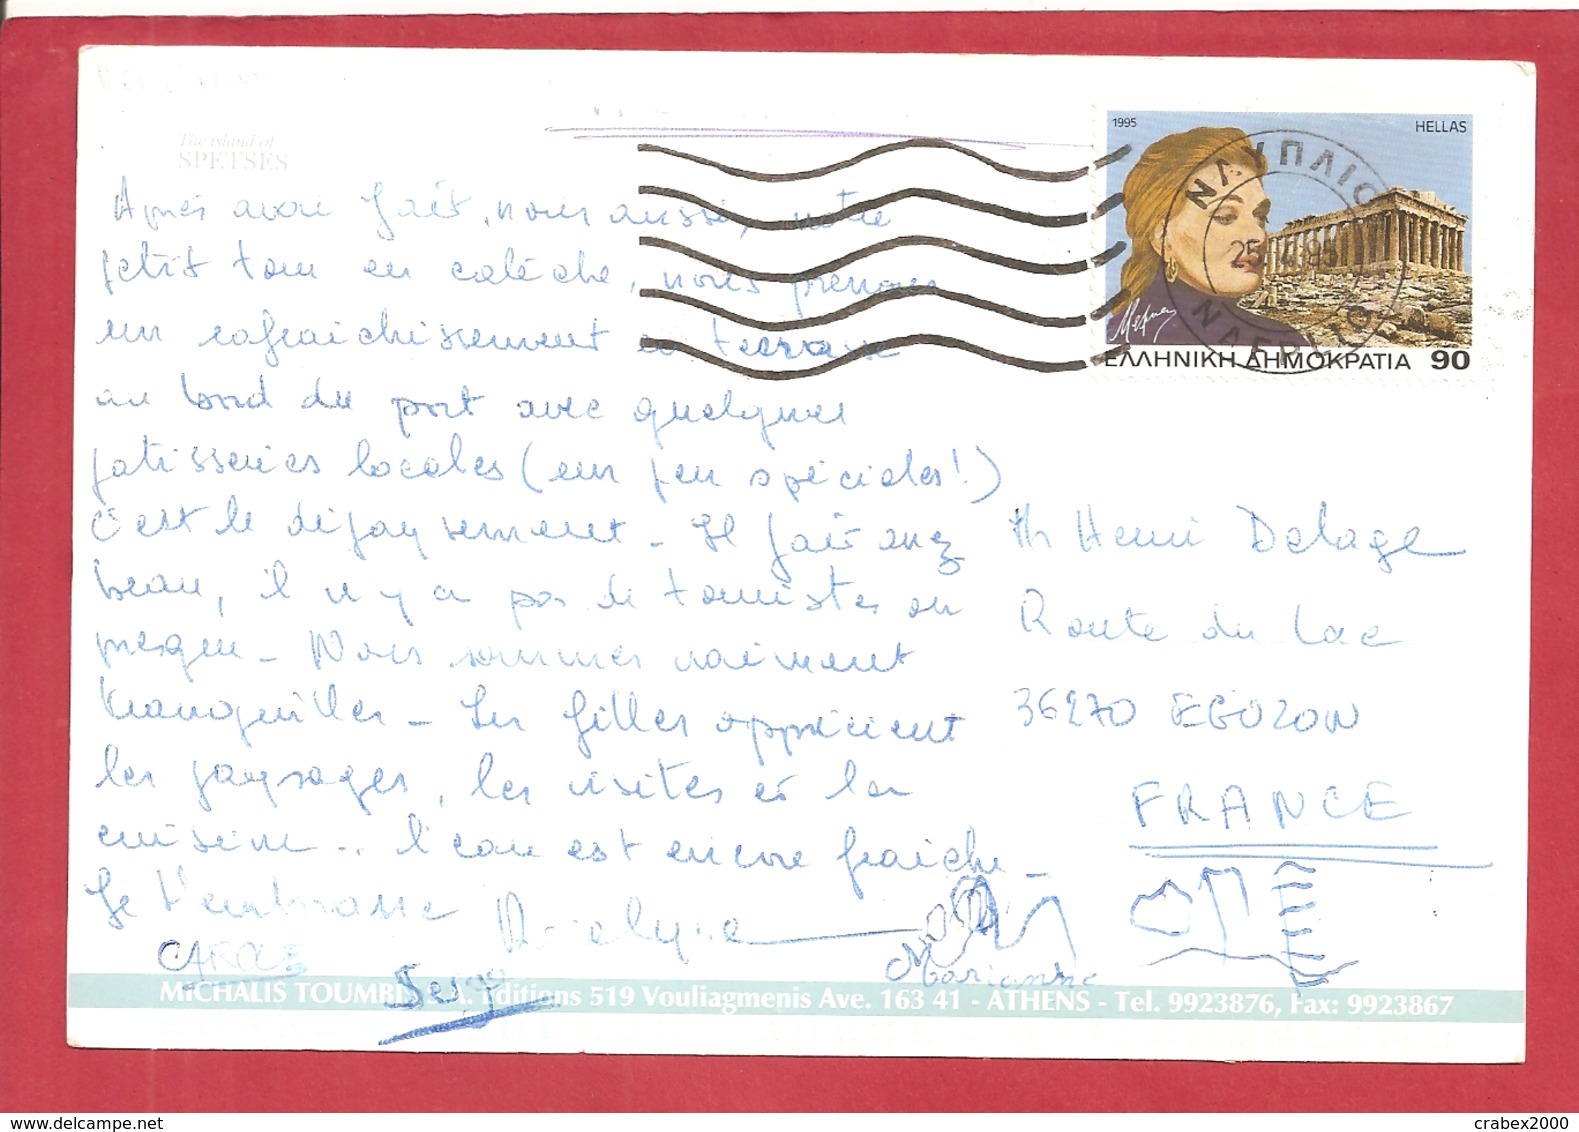 Y&T N°1871 SPETSE     Vers   FRANCE  1995  2 SCANS - Lettres & Documents